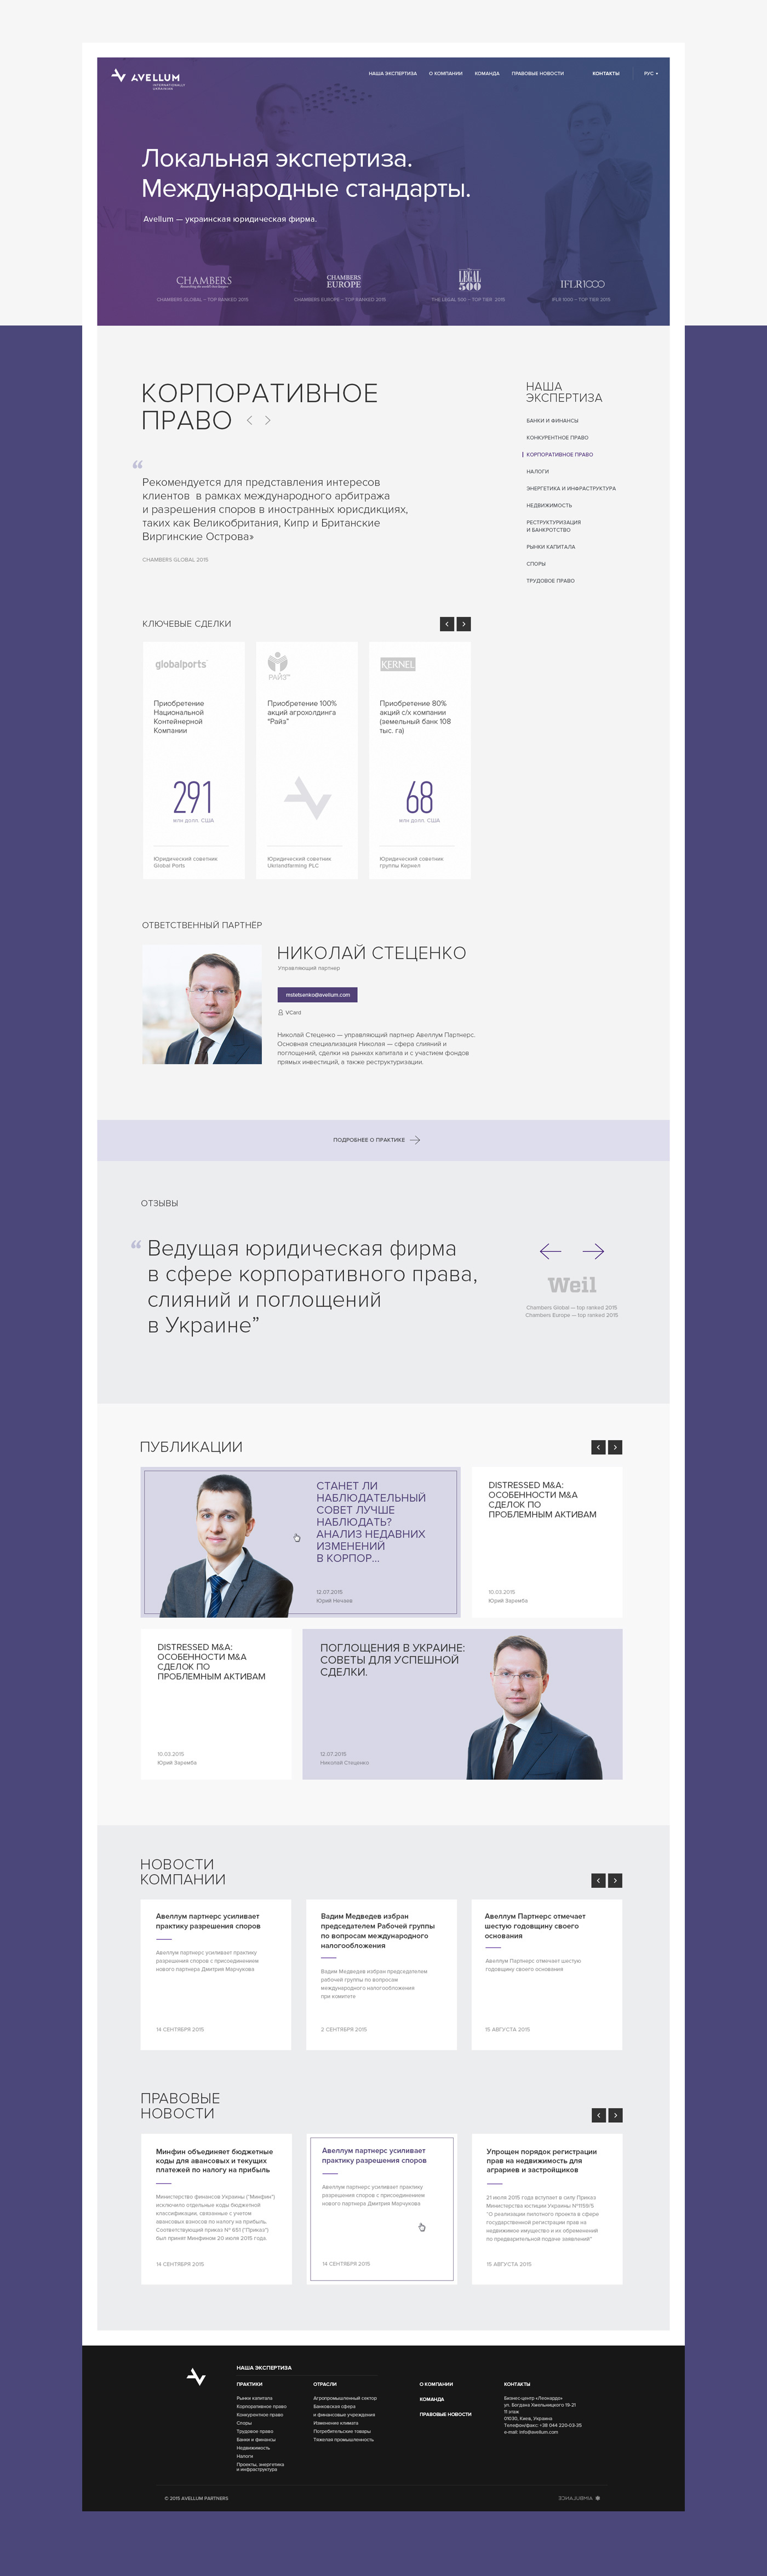 aimbulance Avellum law expertise finance legal Webdesign Responsive mobile transaction ukraine Website